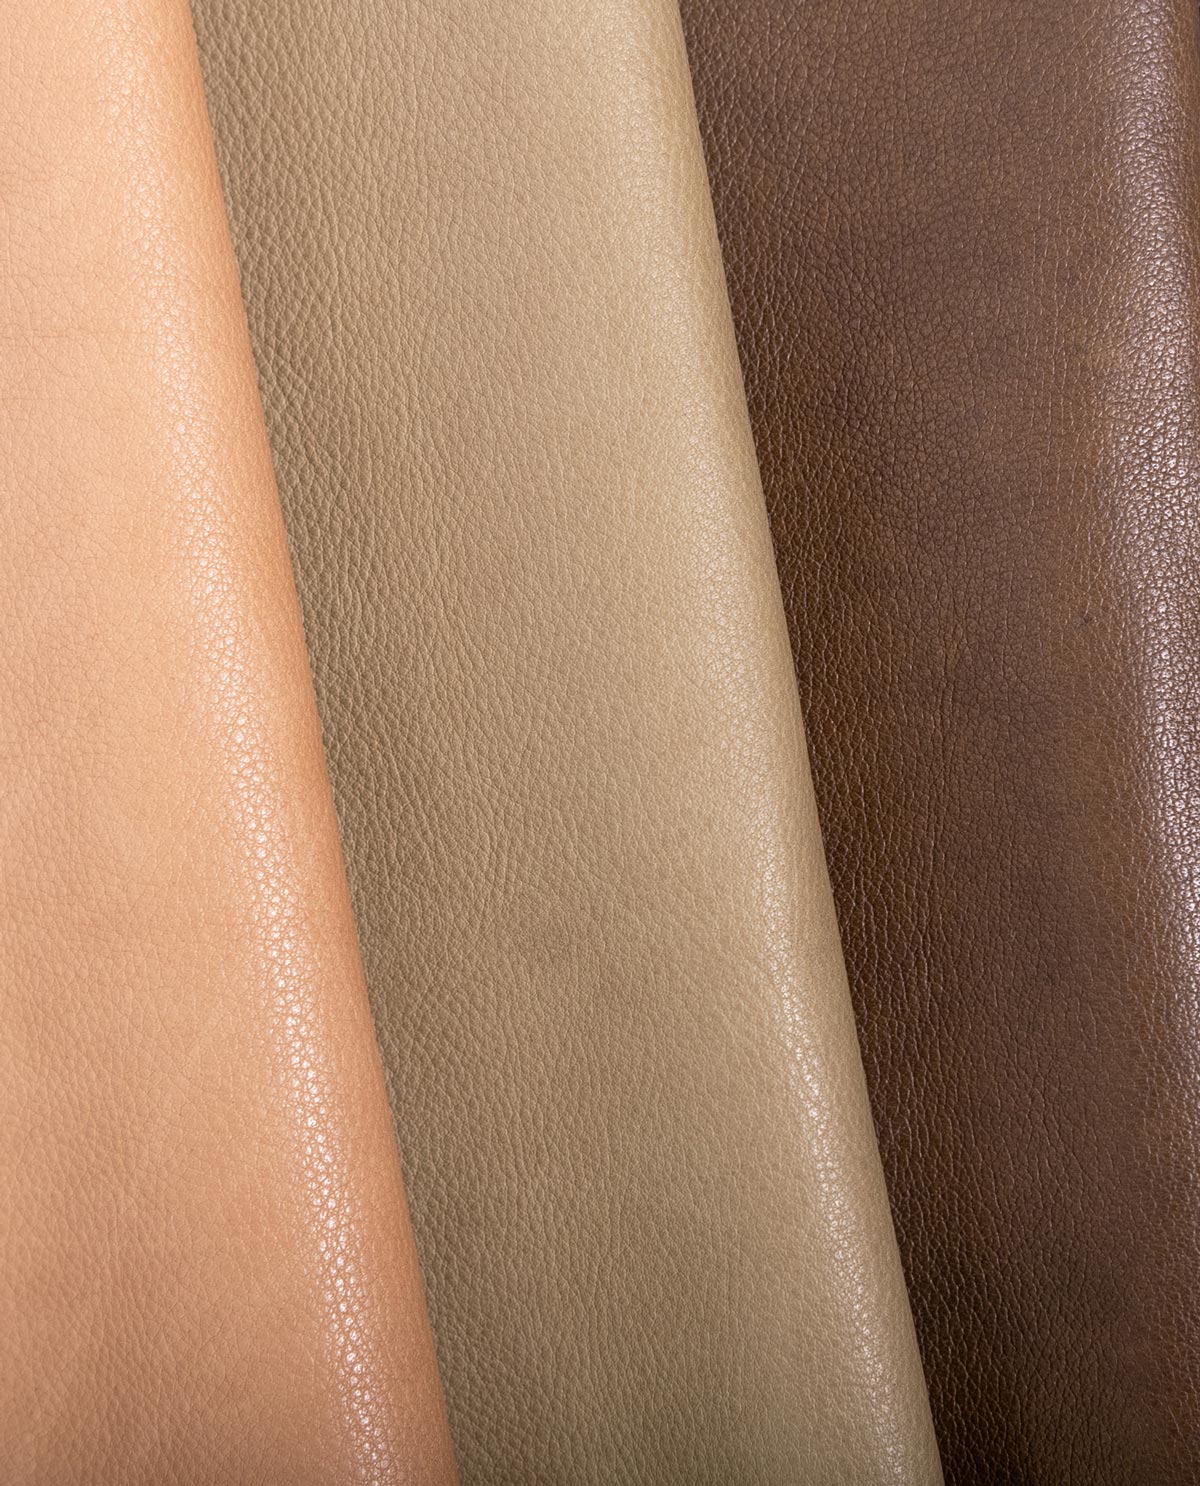 Antiquity - Top Grain Distressed Leather - Jamie Stern Design